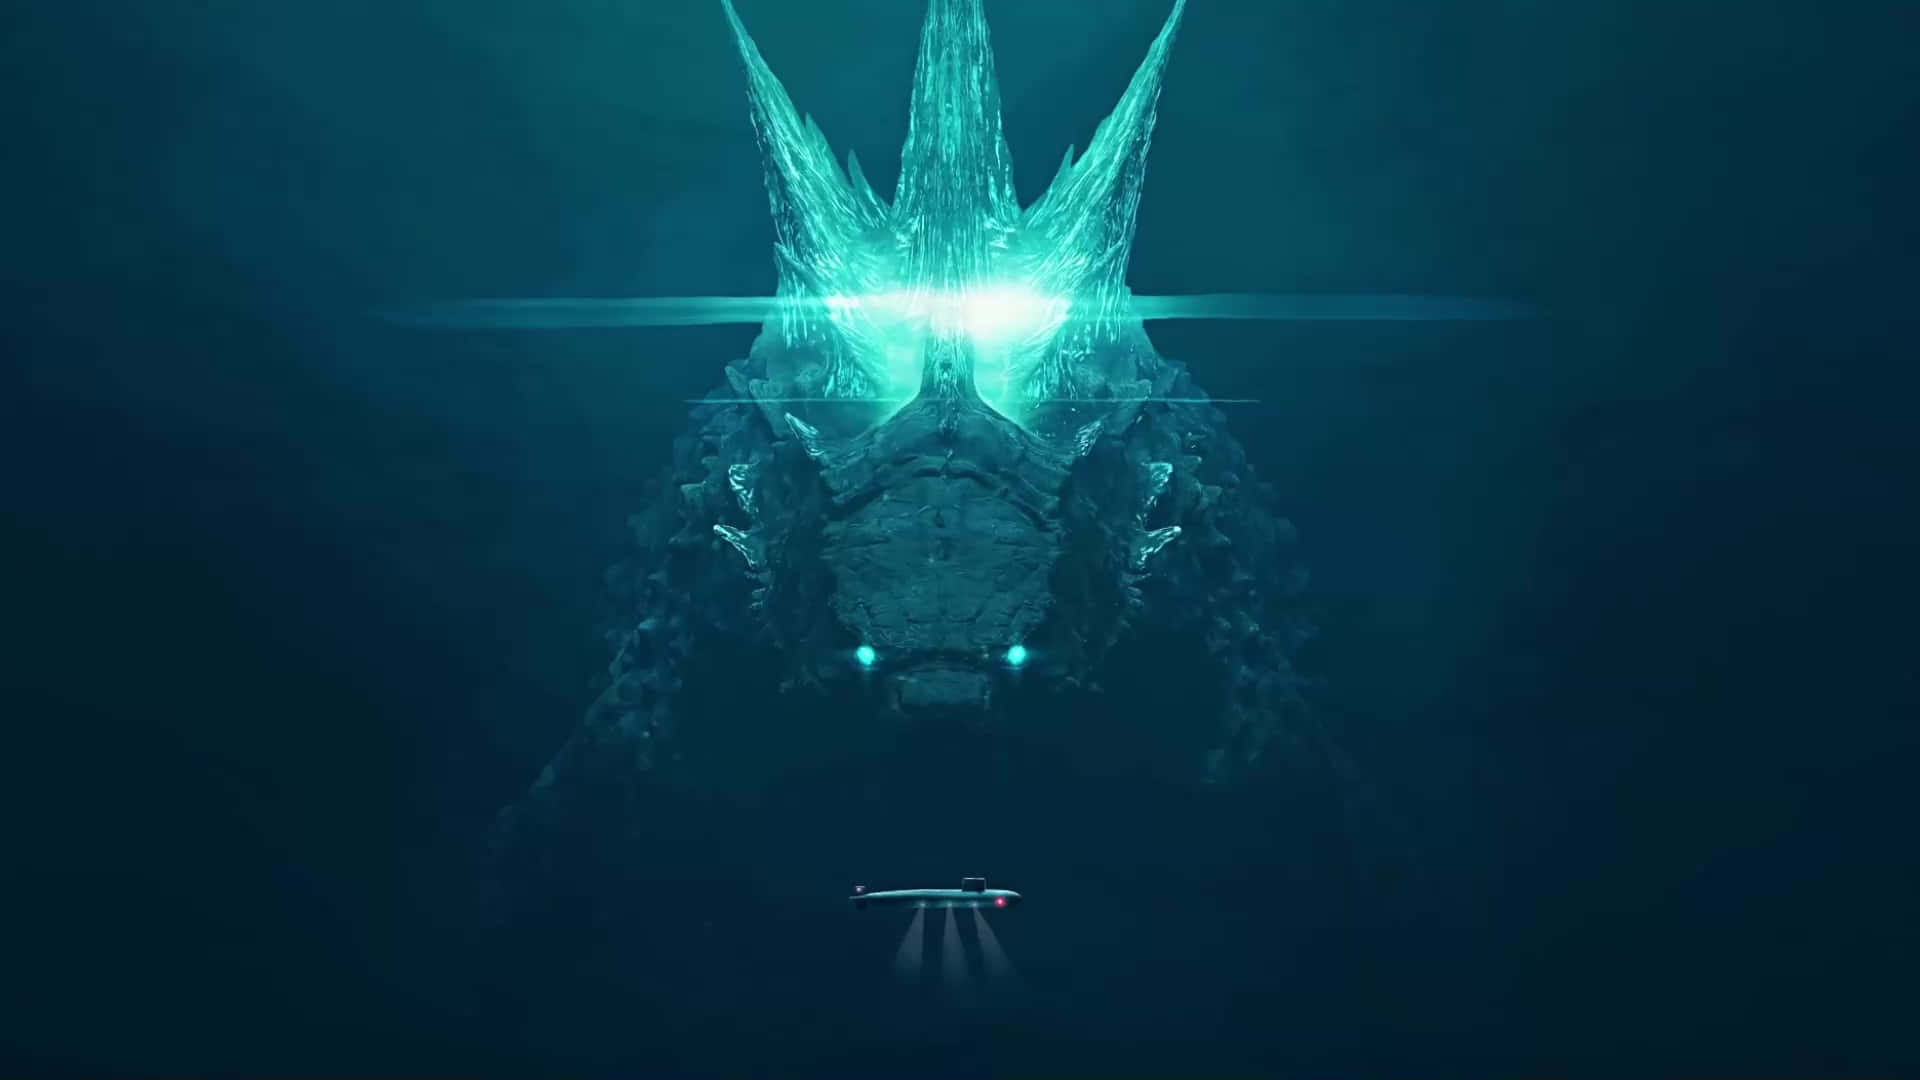 Imagende Godzilla Con Luz Azul Brillante.